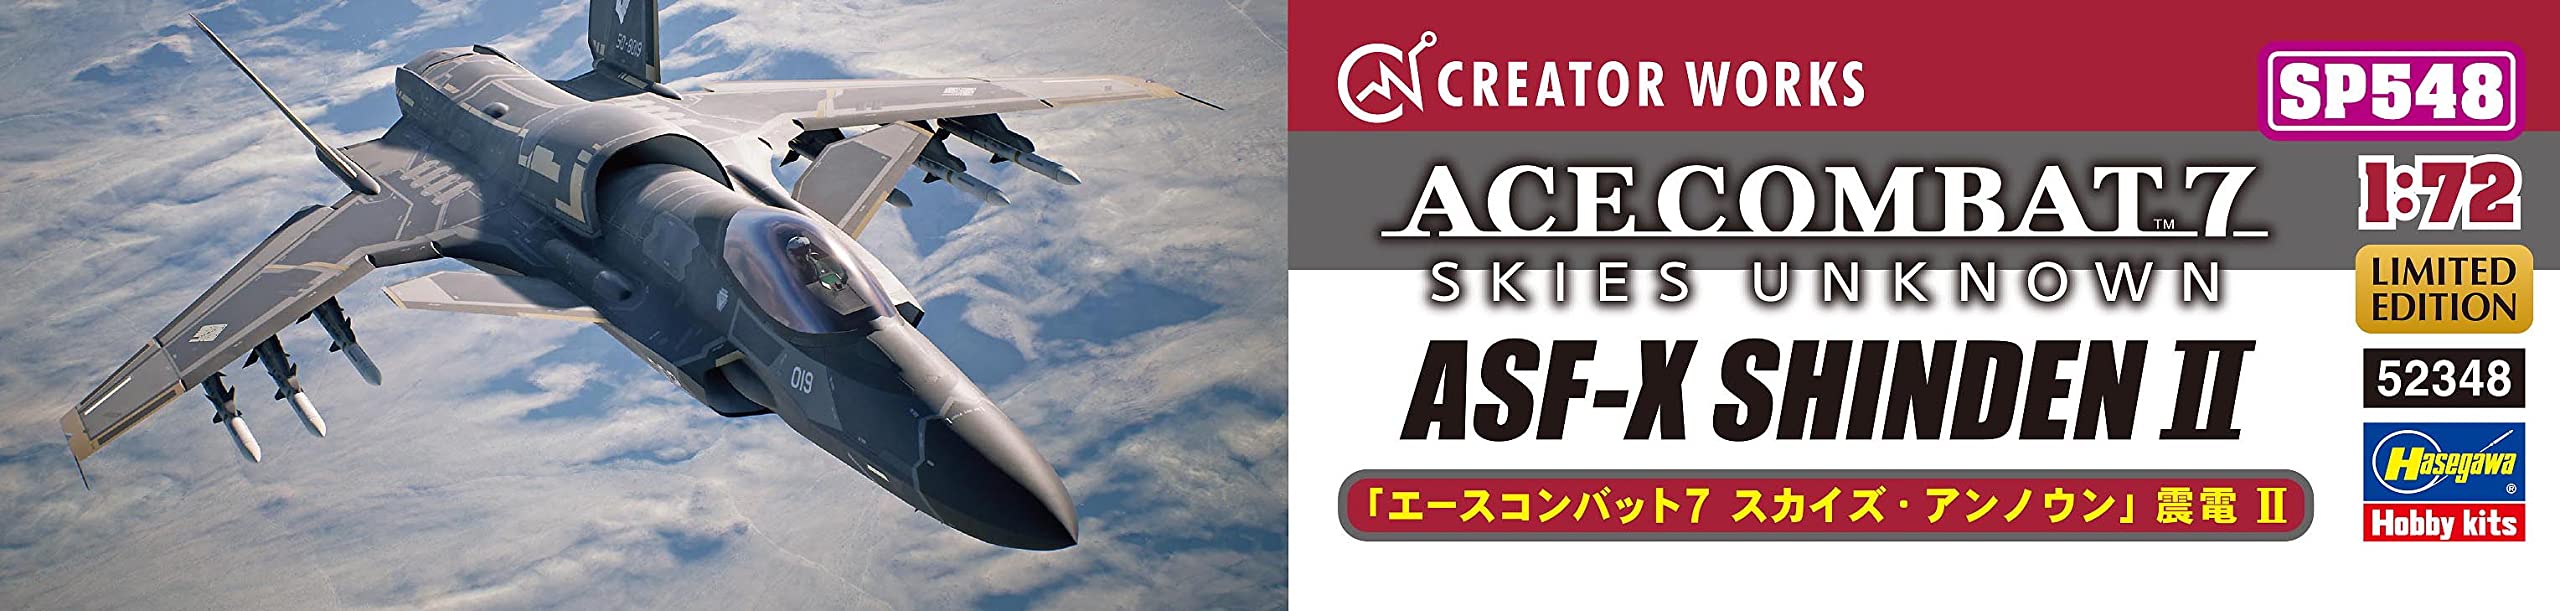 Hasegawa 1/72 ACE COMBAT 7 SKIES UNKNOWN ASF-X SHINDEN II Model kit SP548 NEW_7